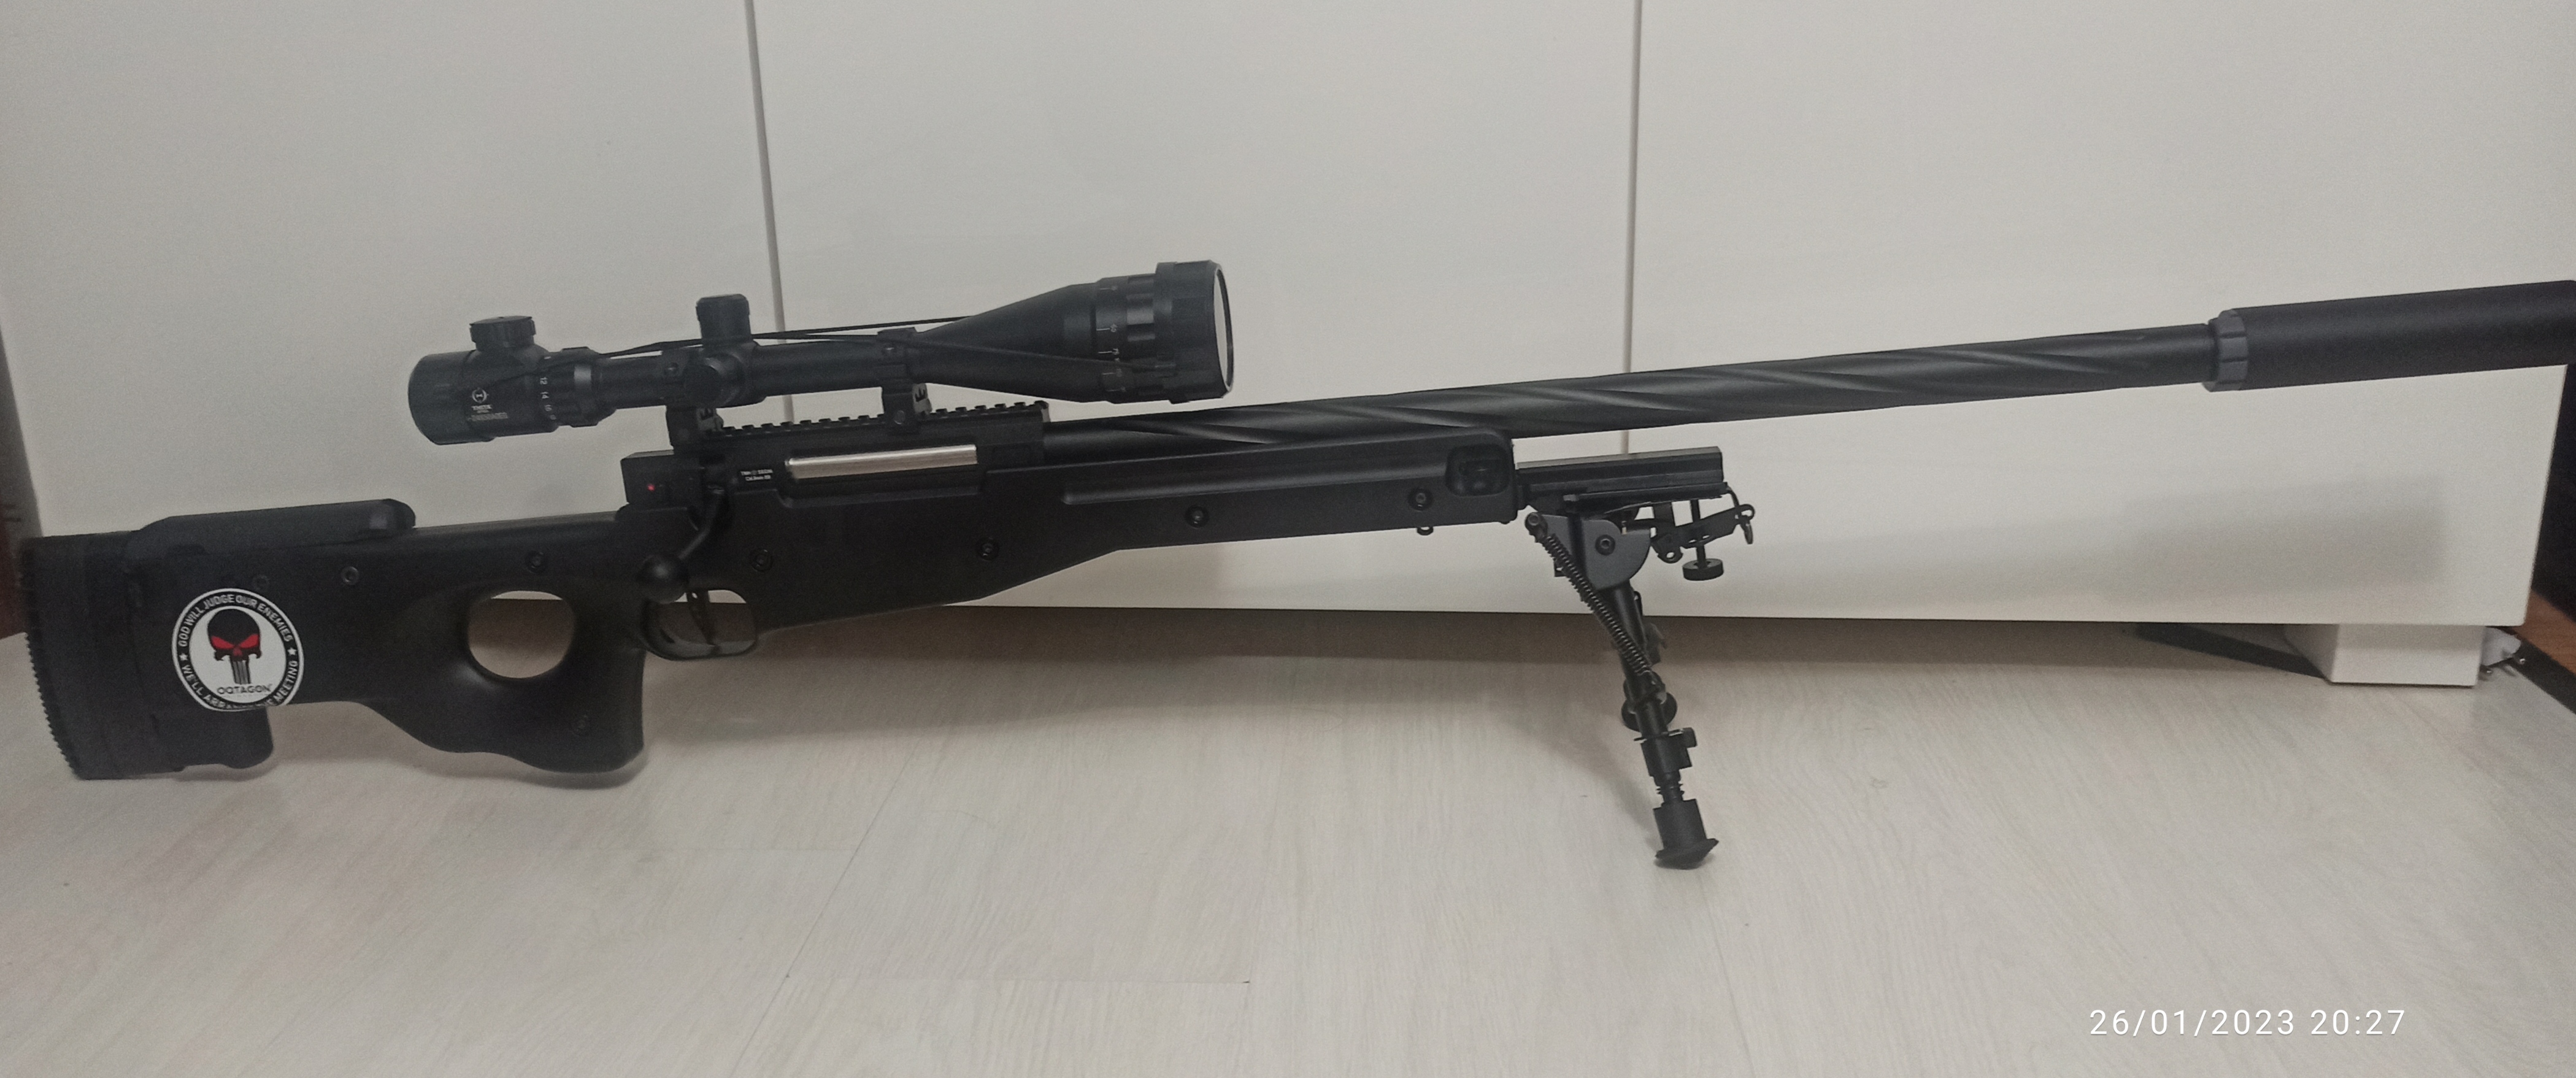 A real photo of Sniper rifle SSG96 2.8 J M160 Novritsch by Răzvan  (1)